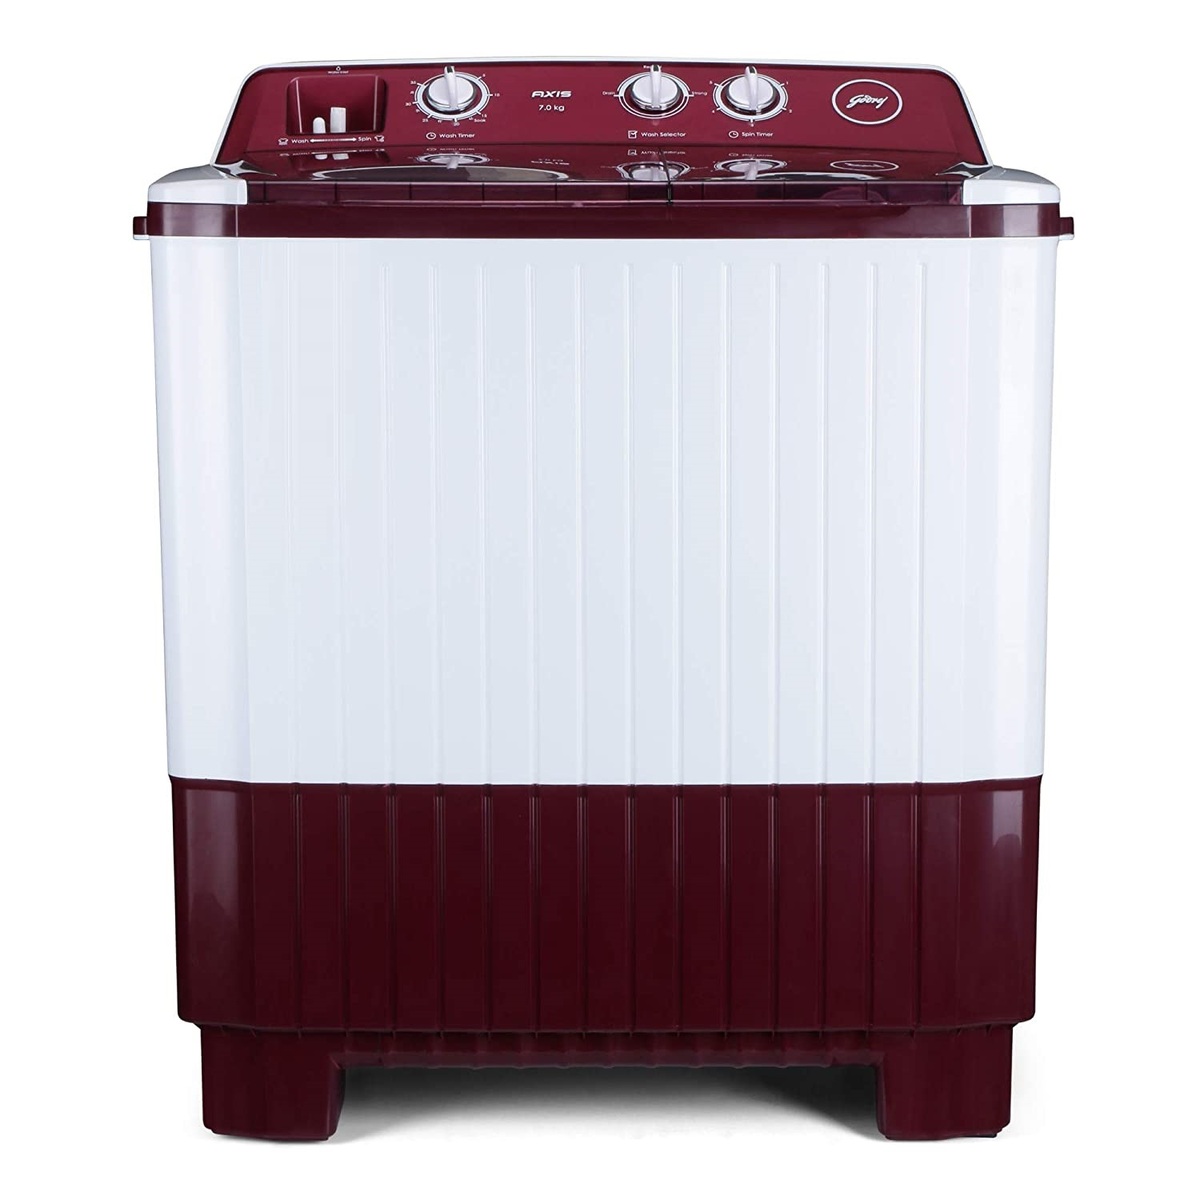 Godrej Semi Automatic Top Loading Washing Machine WSAXIS 5.0 SN2 7Kg